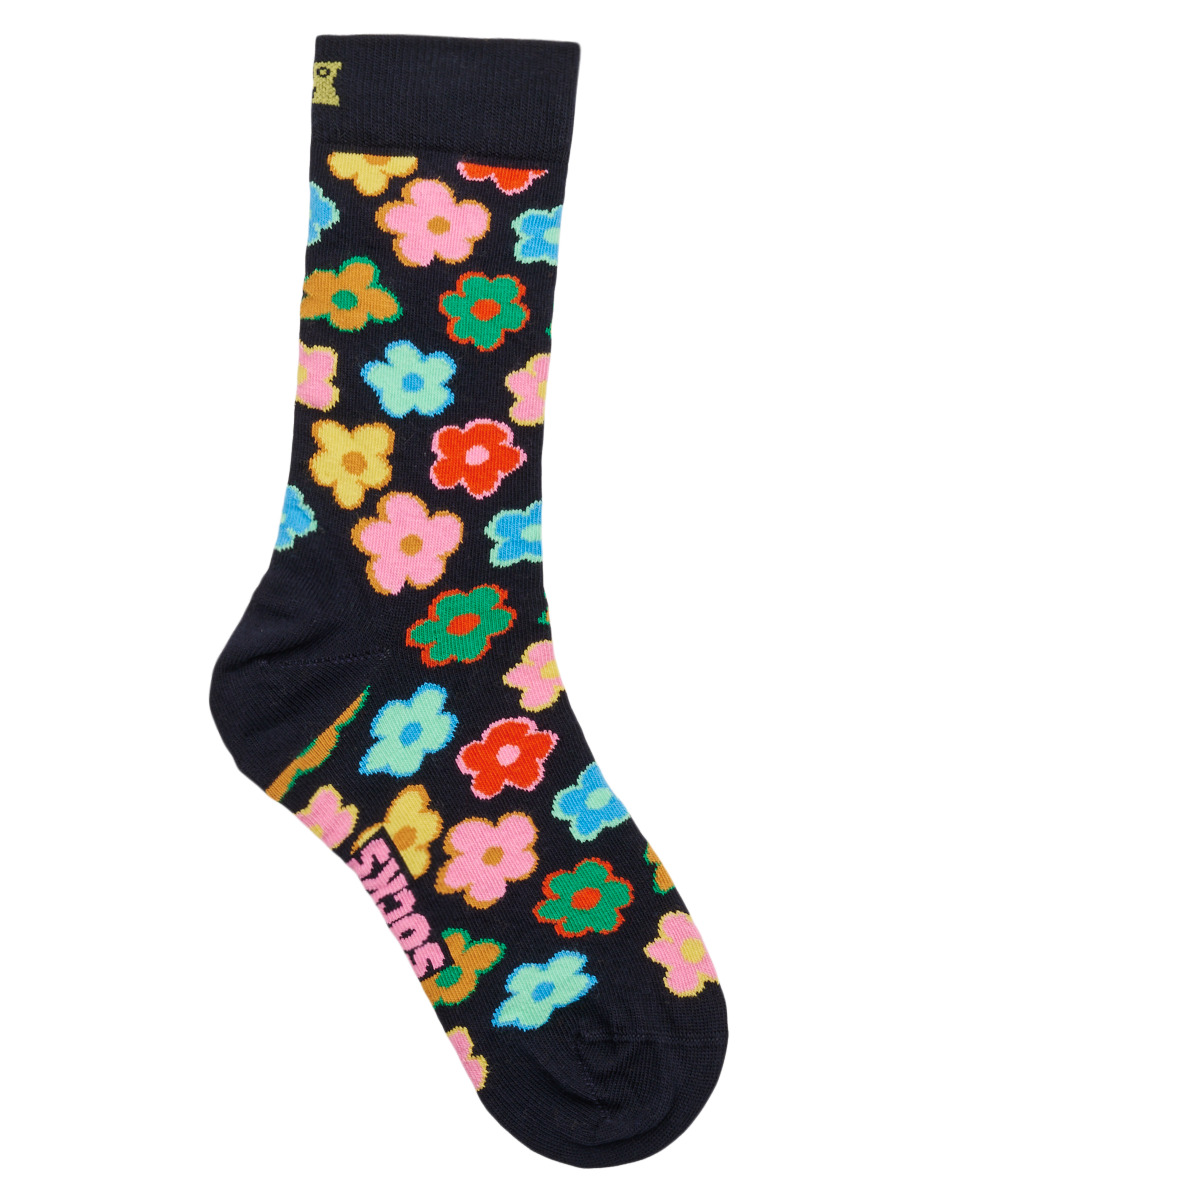 Happy socks  FLOWER  Podkolenky